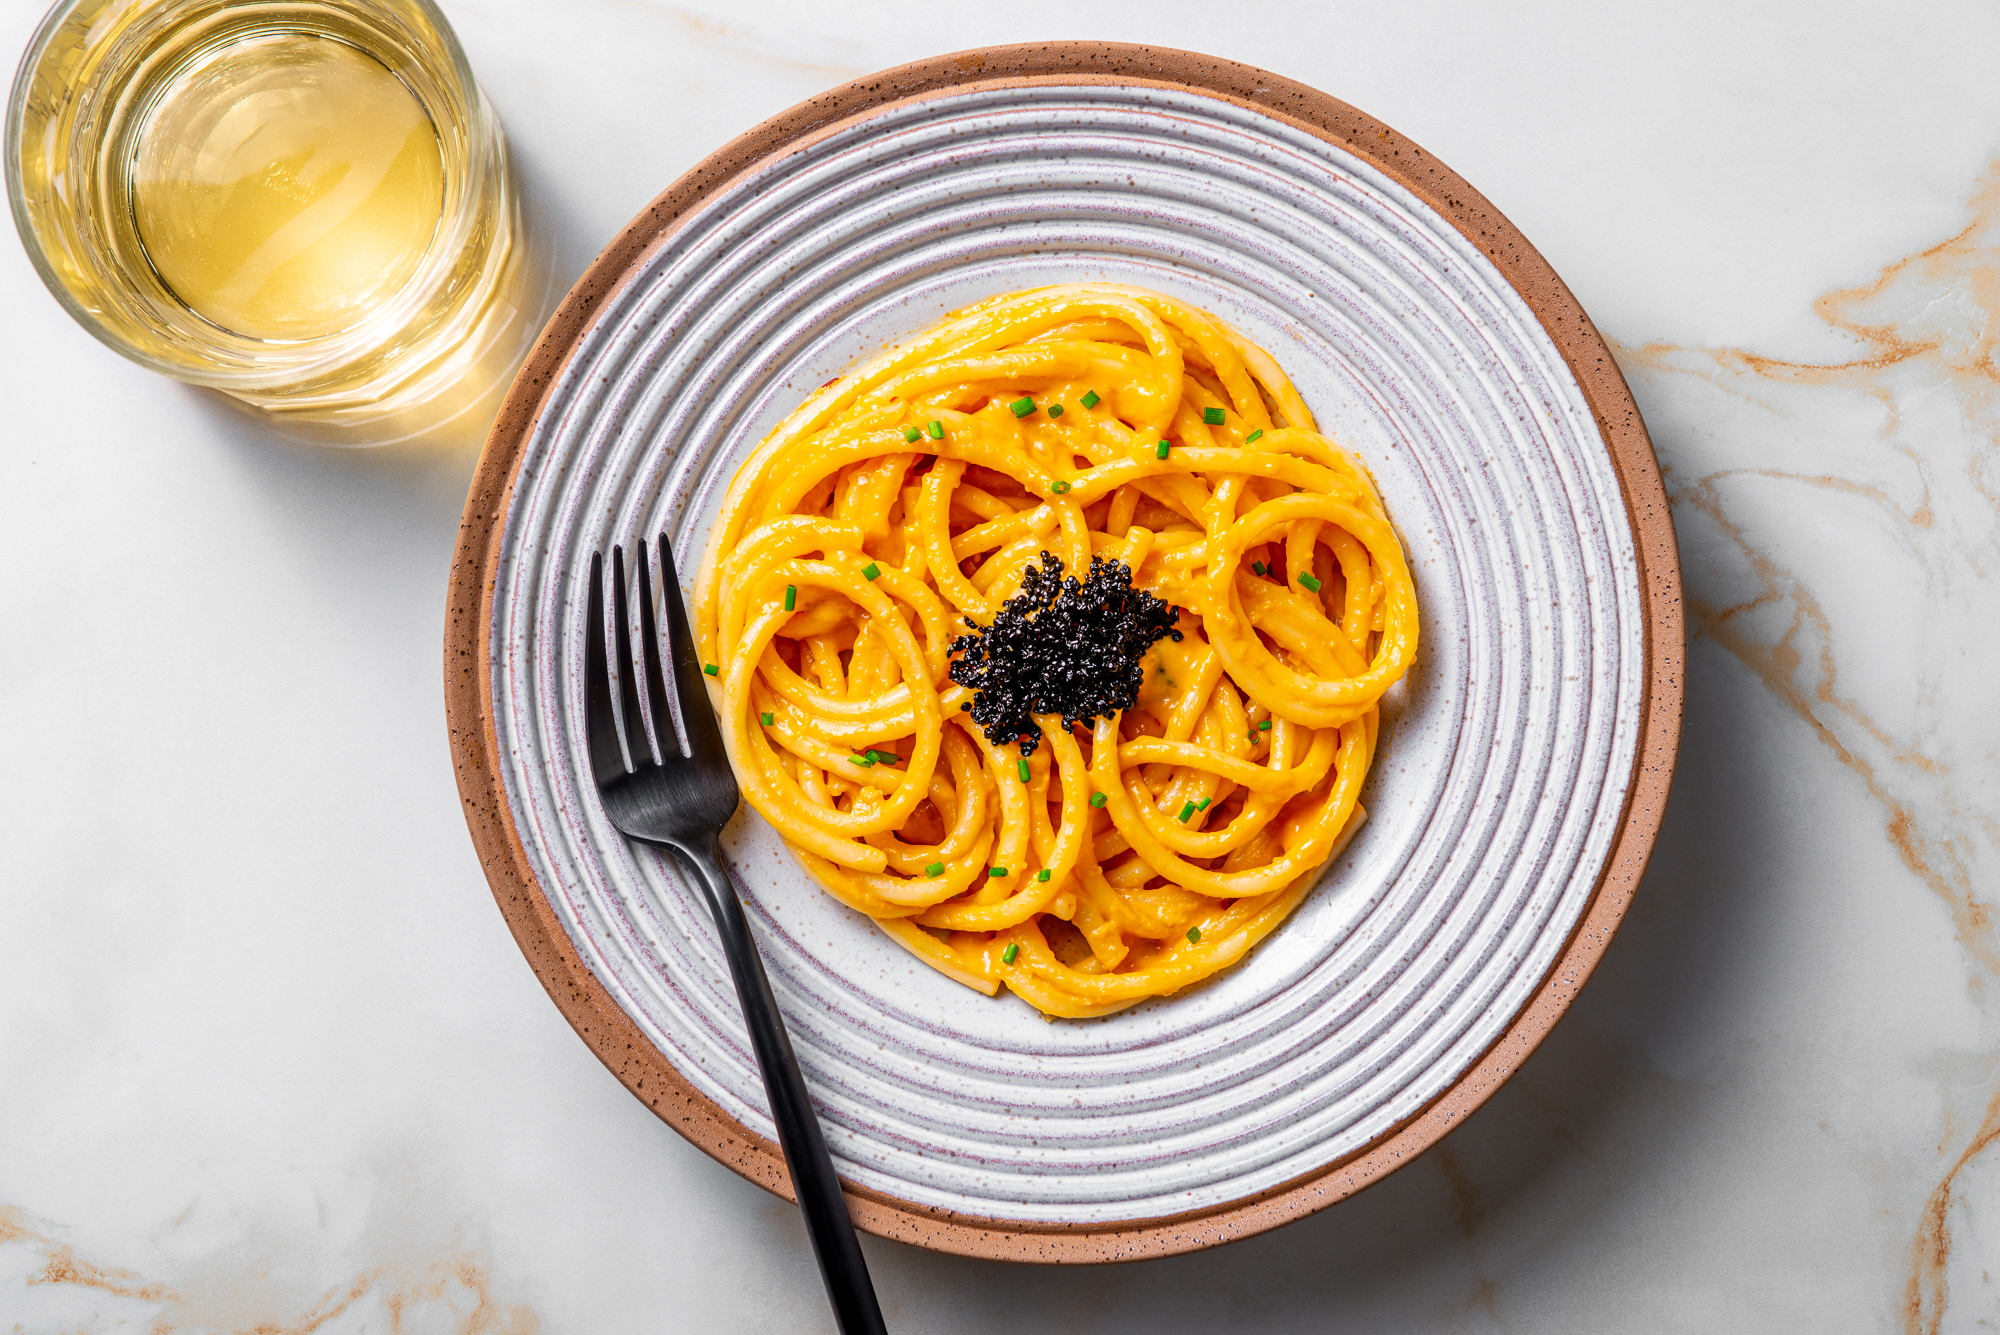 Creamy Uni Pasta (Japanese sea urchin pasta) - Tiffoodss